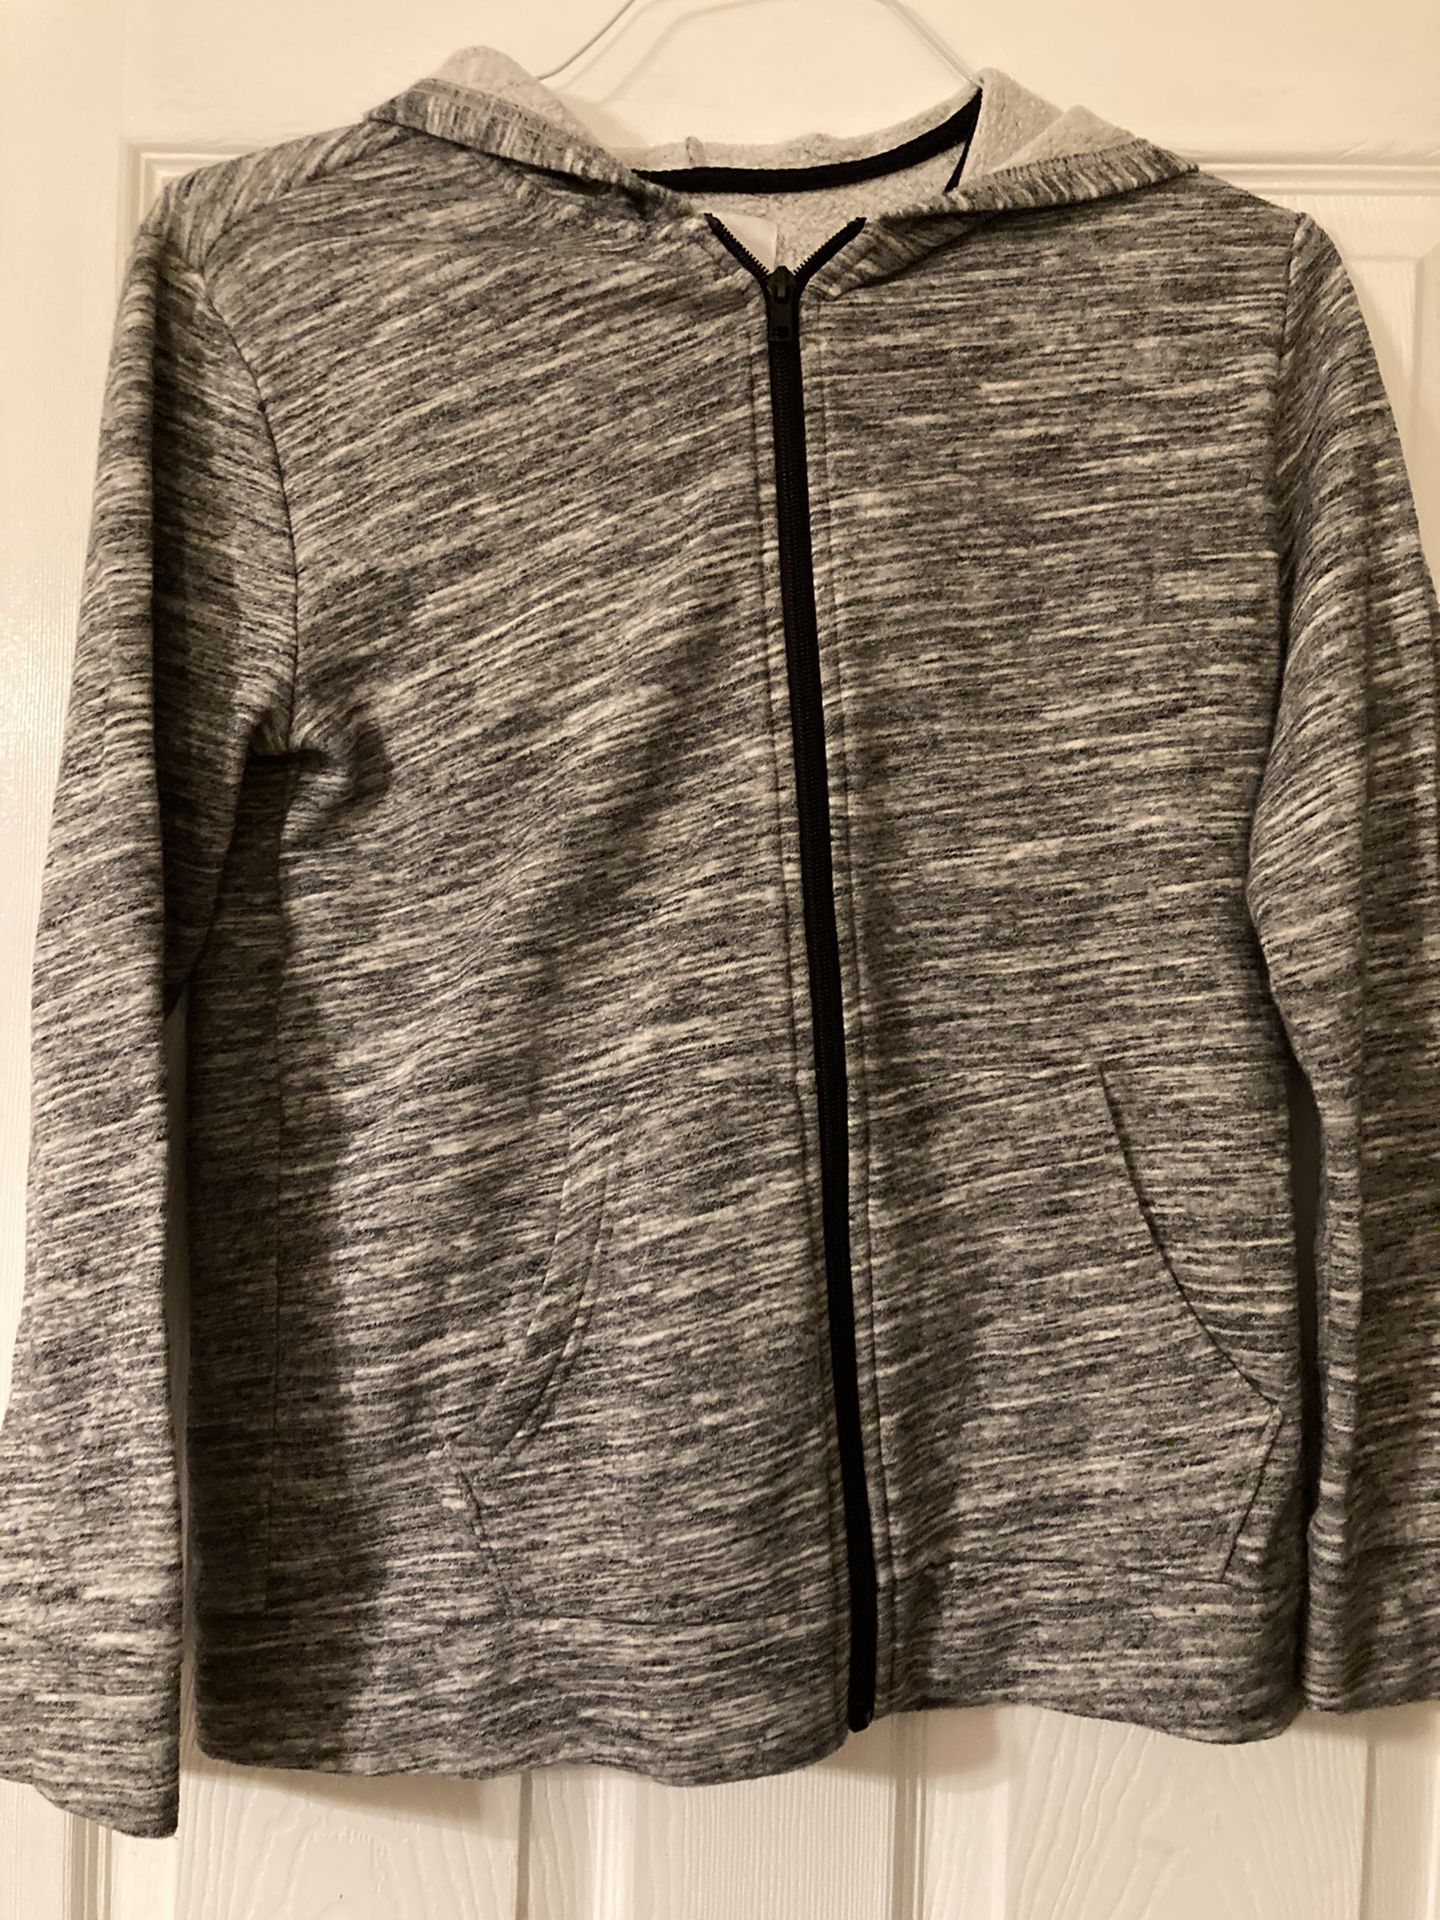 BOYS Size XL(14-16) Gray Zippered Hooded Sweatshirt Jacket